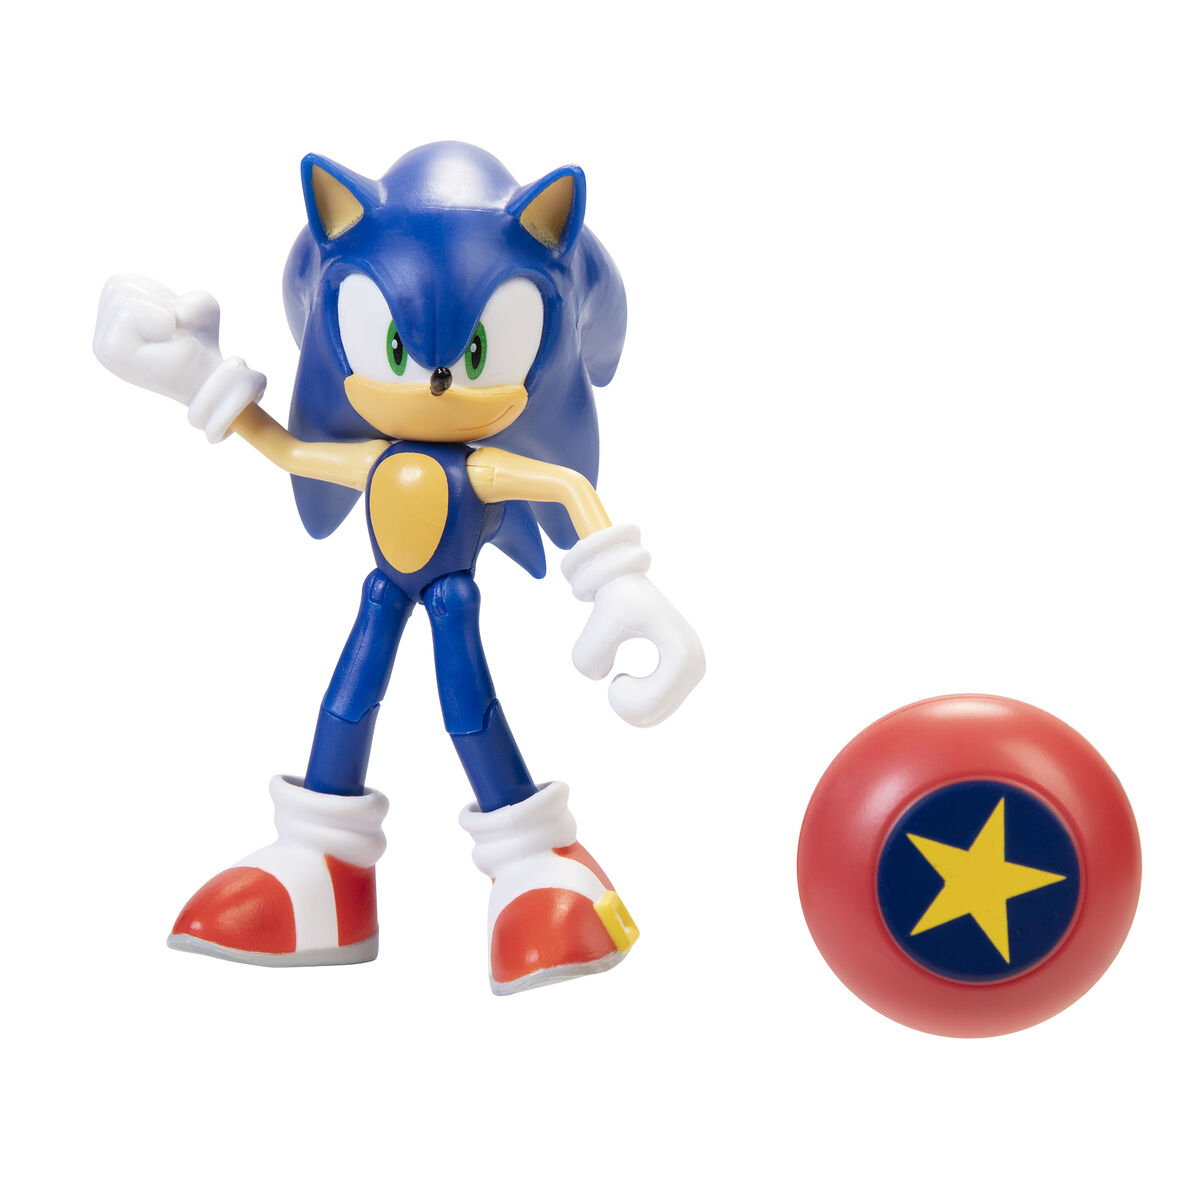 Boneco Articulado Burrobot Jakks Original Novo Sonic Sega